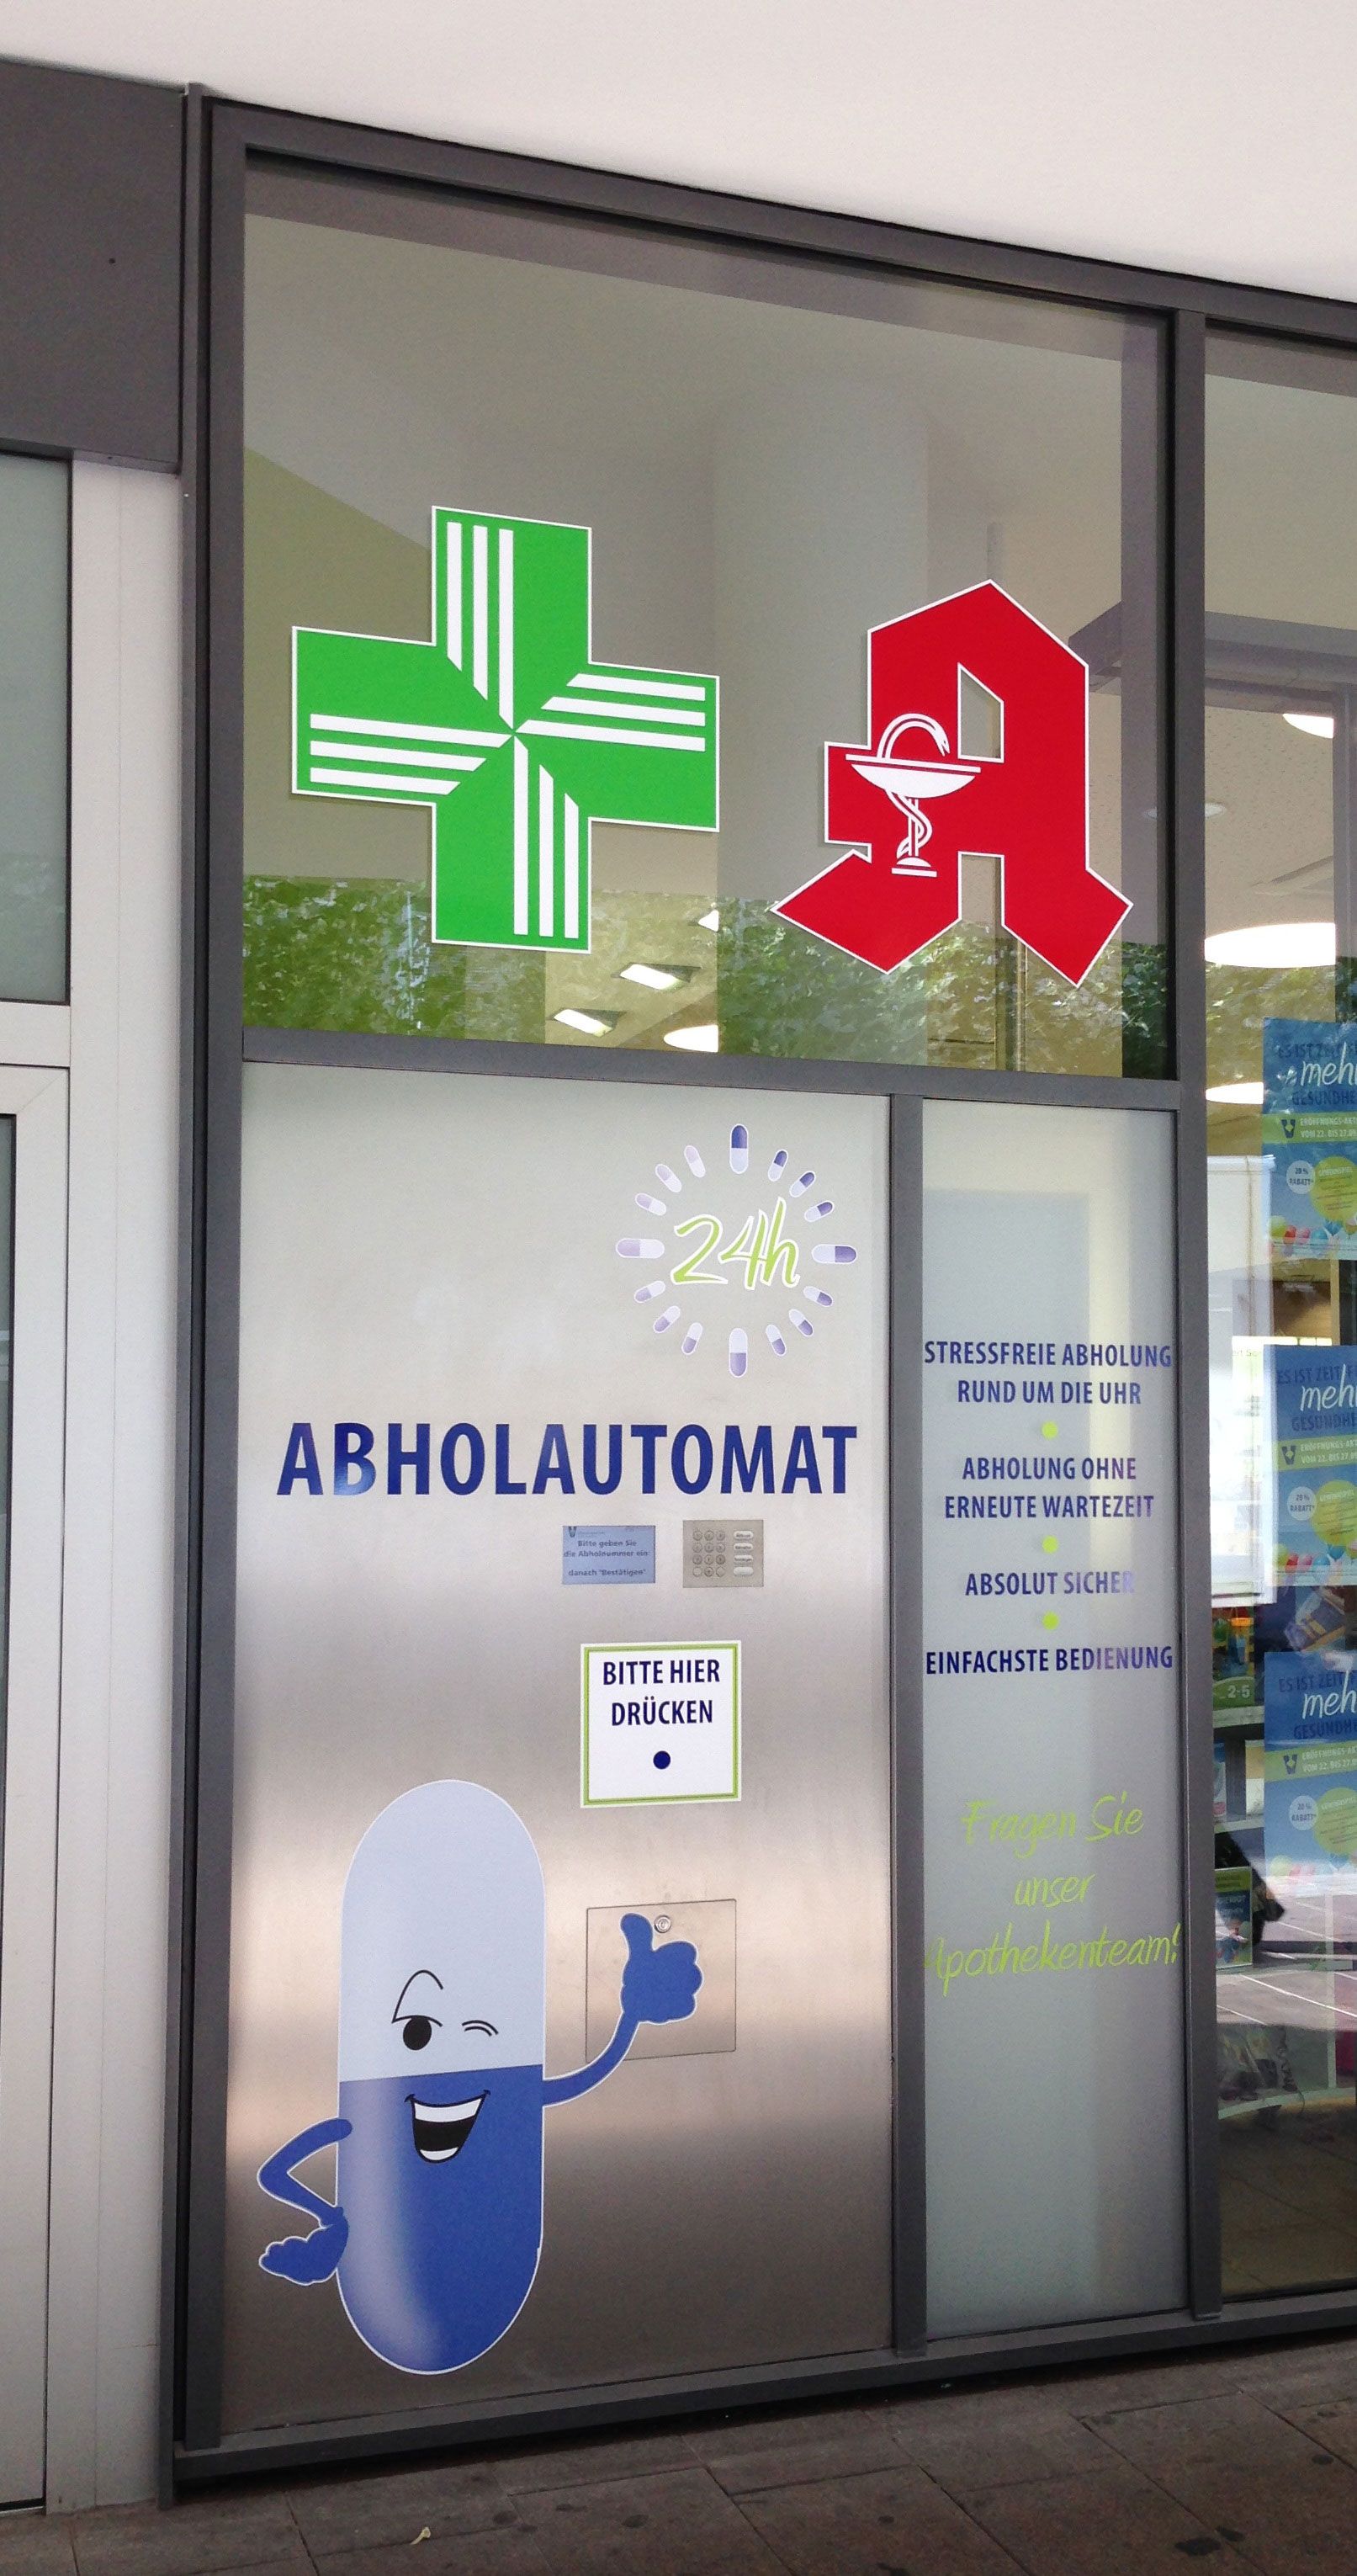 Abholautomat für Medikamente